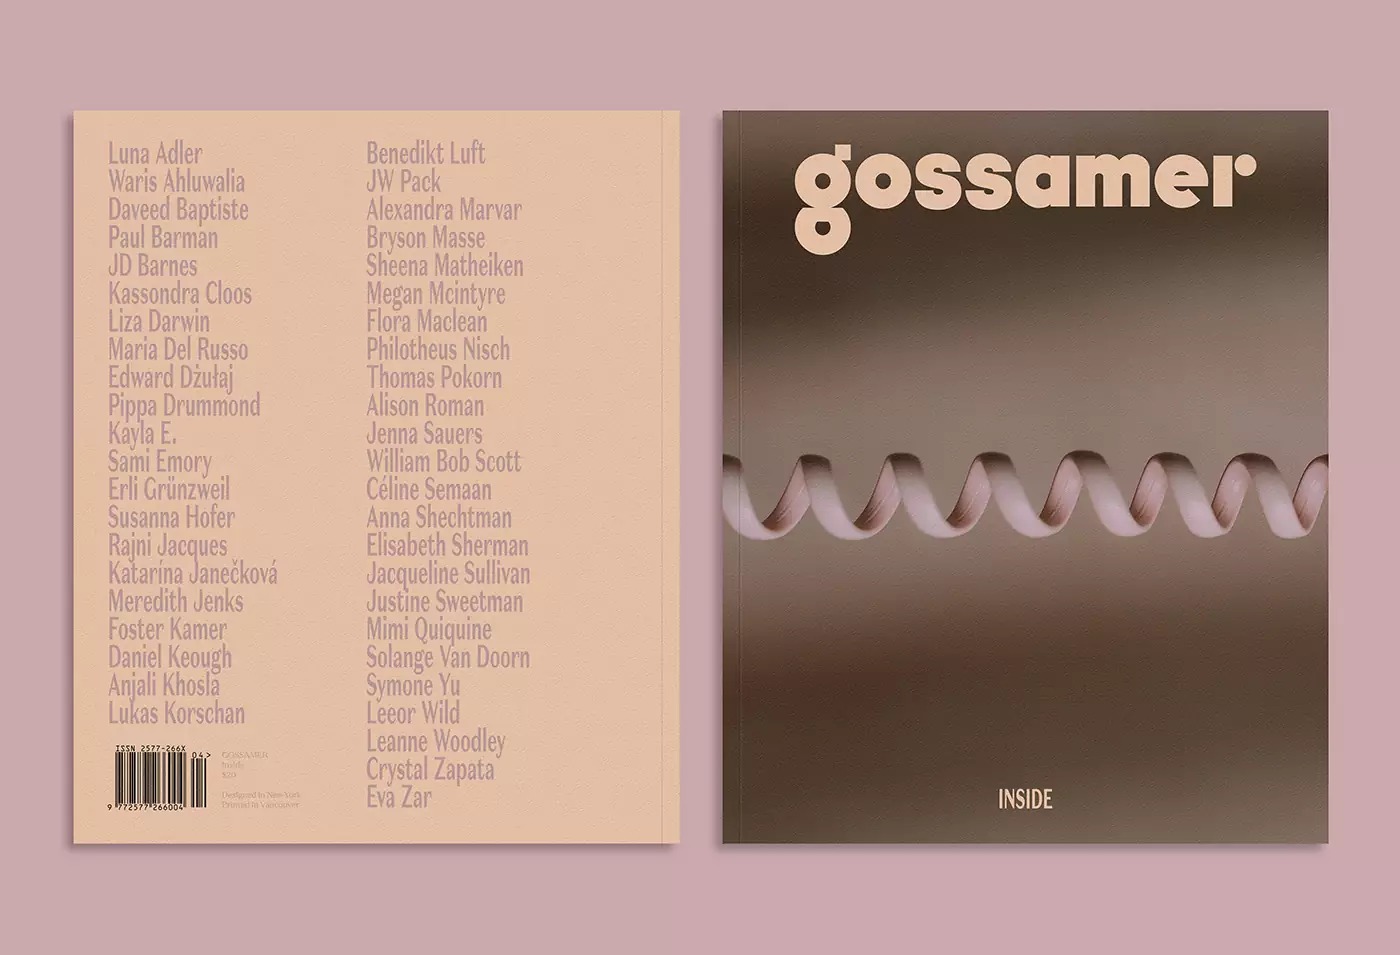 Gossamer杂志内页排版设计